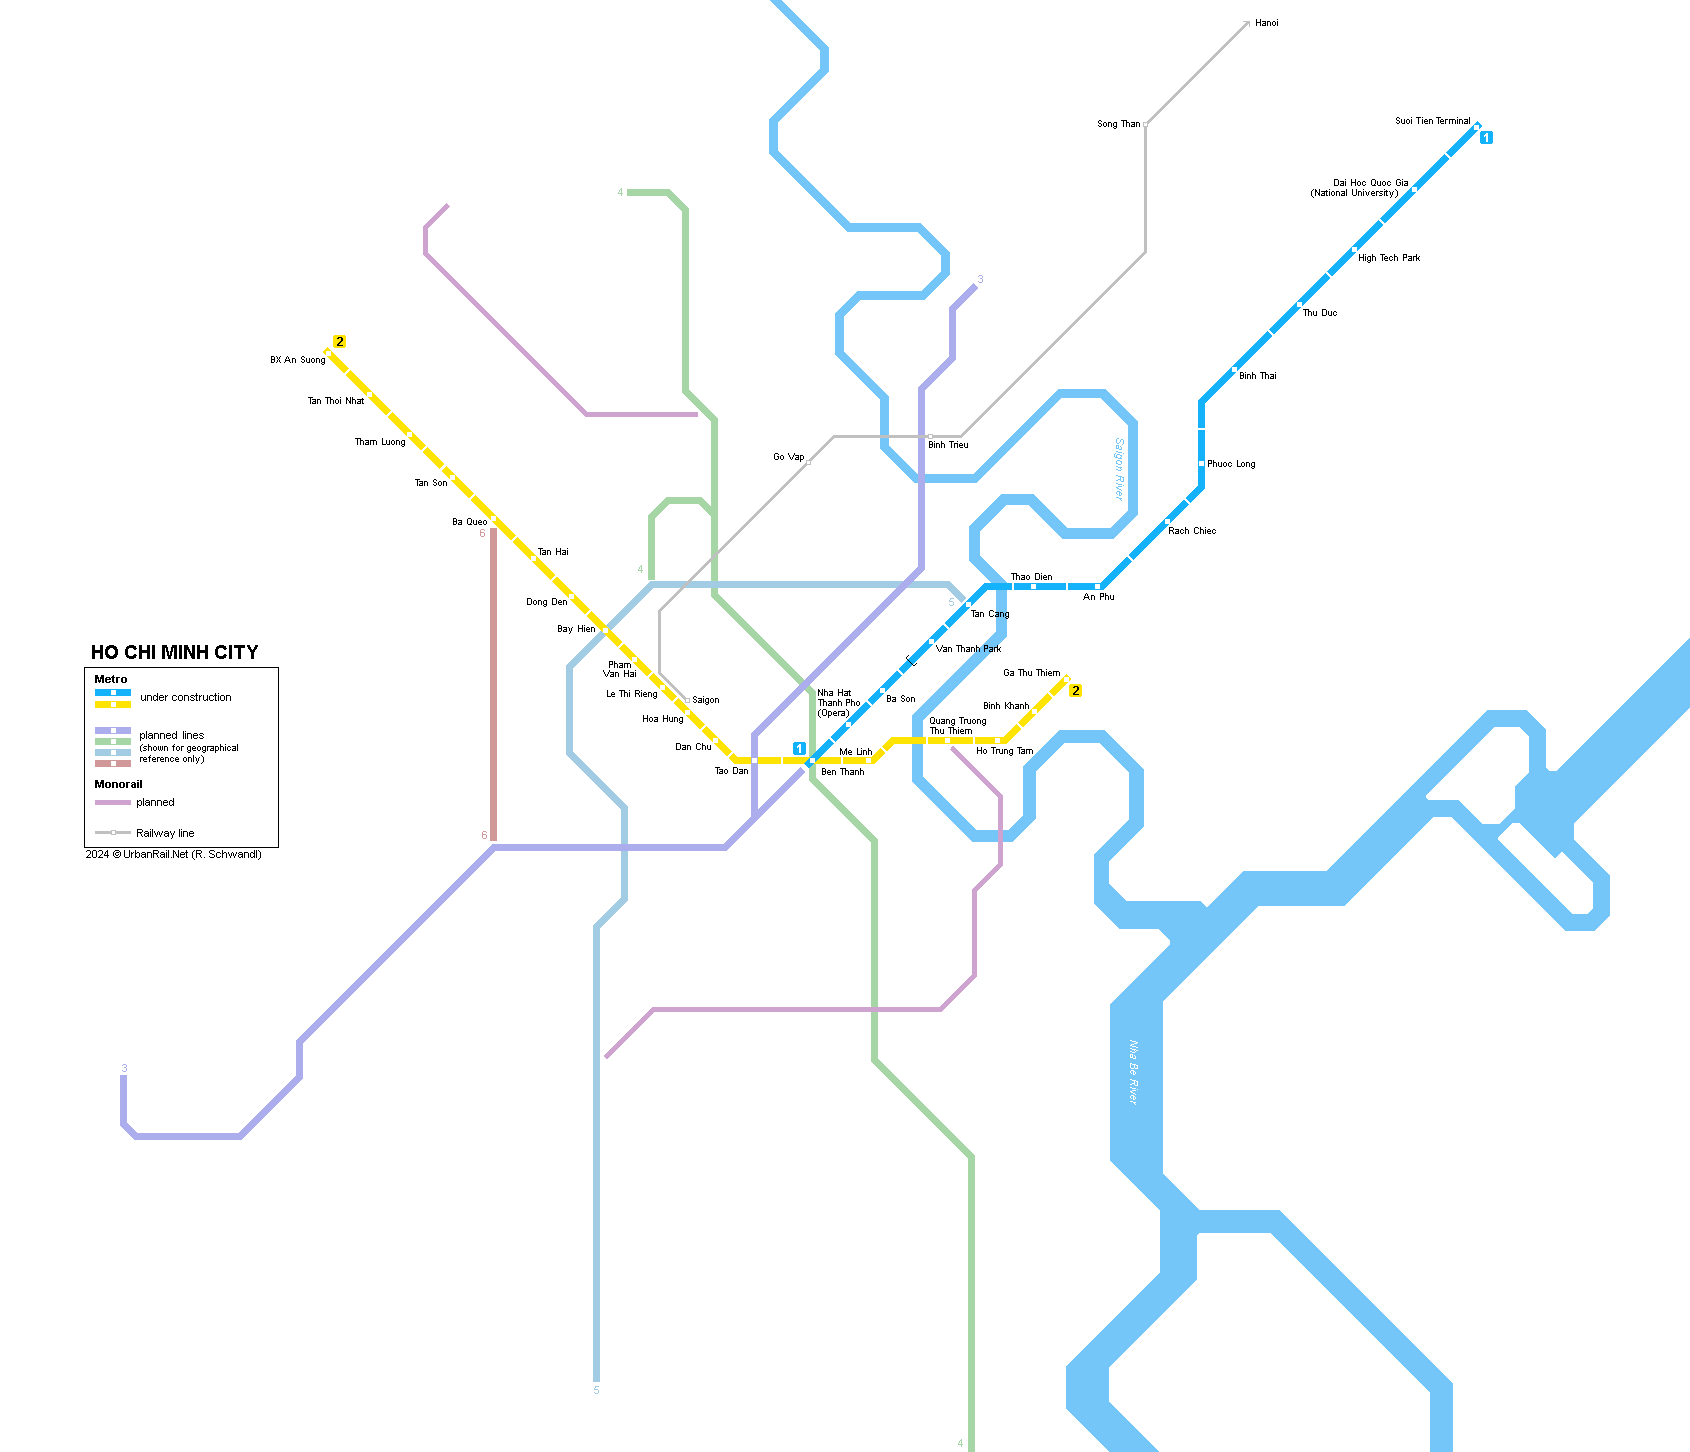 o Chi Minh City metro network map